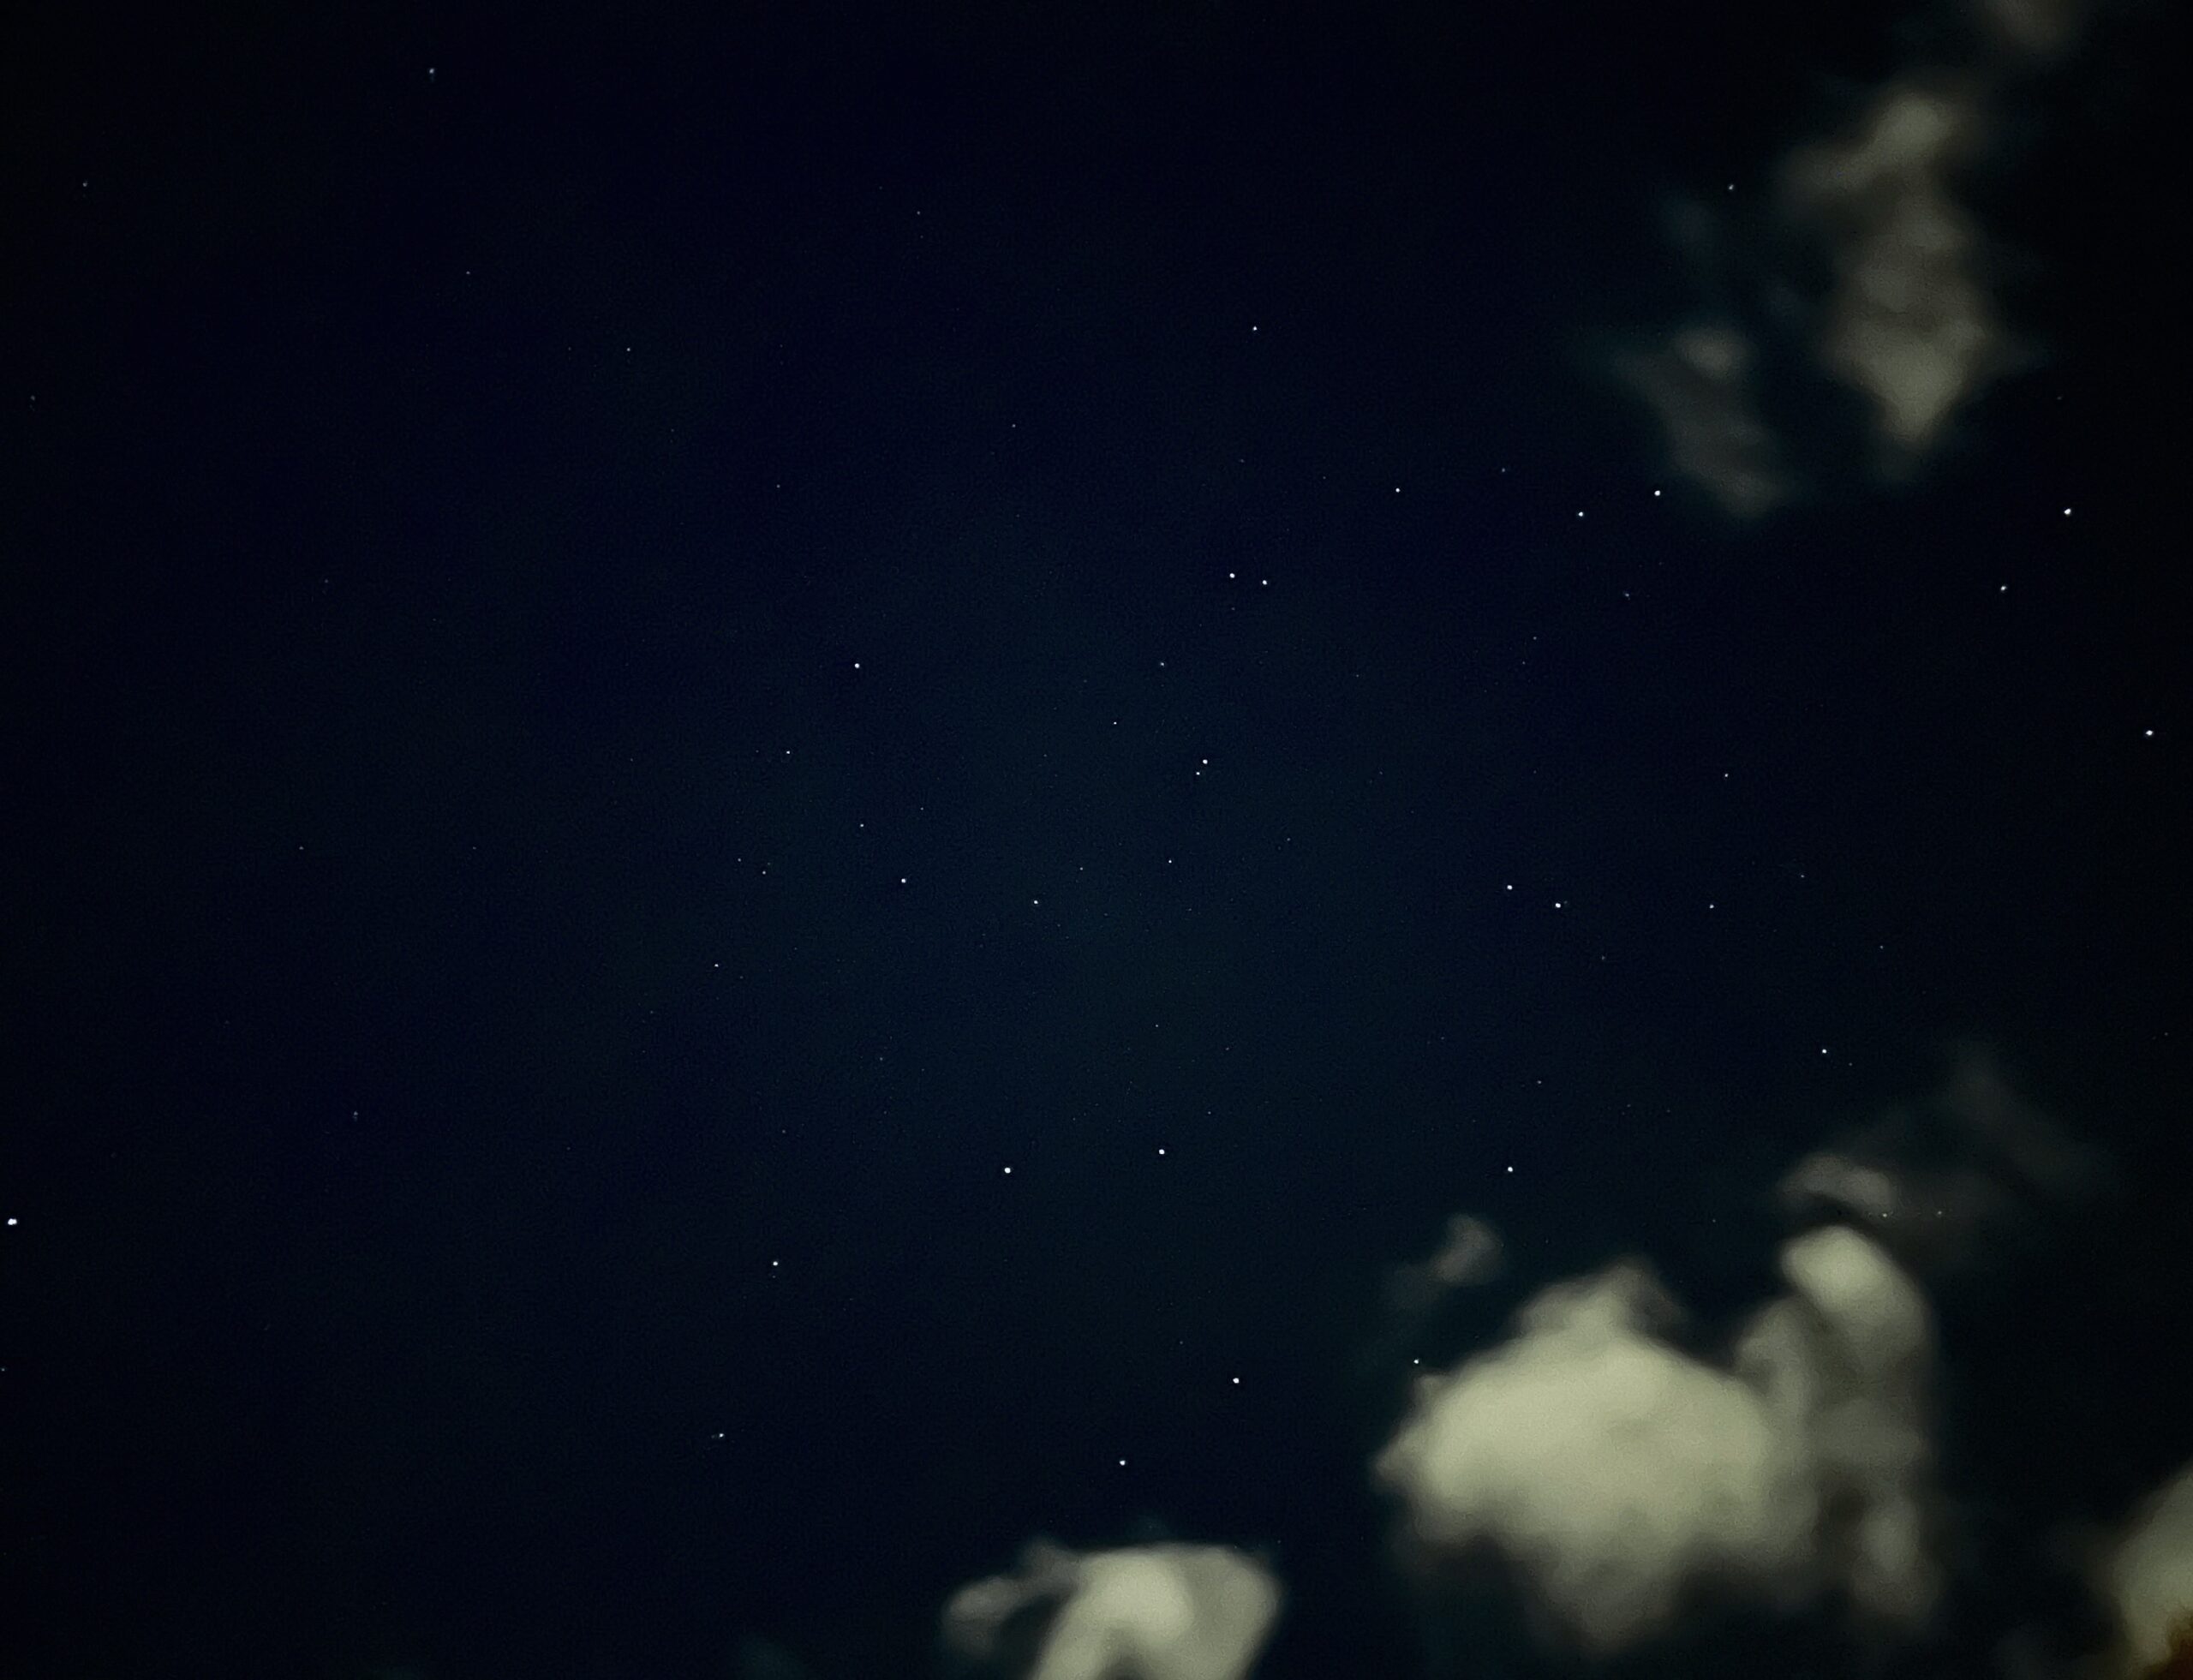 stars on a cloudy night